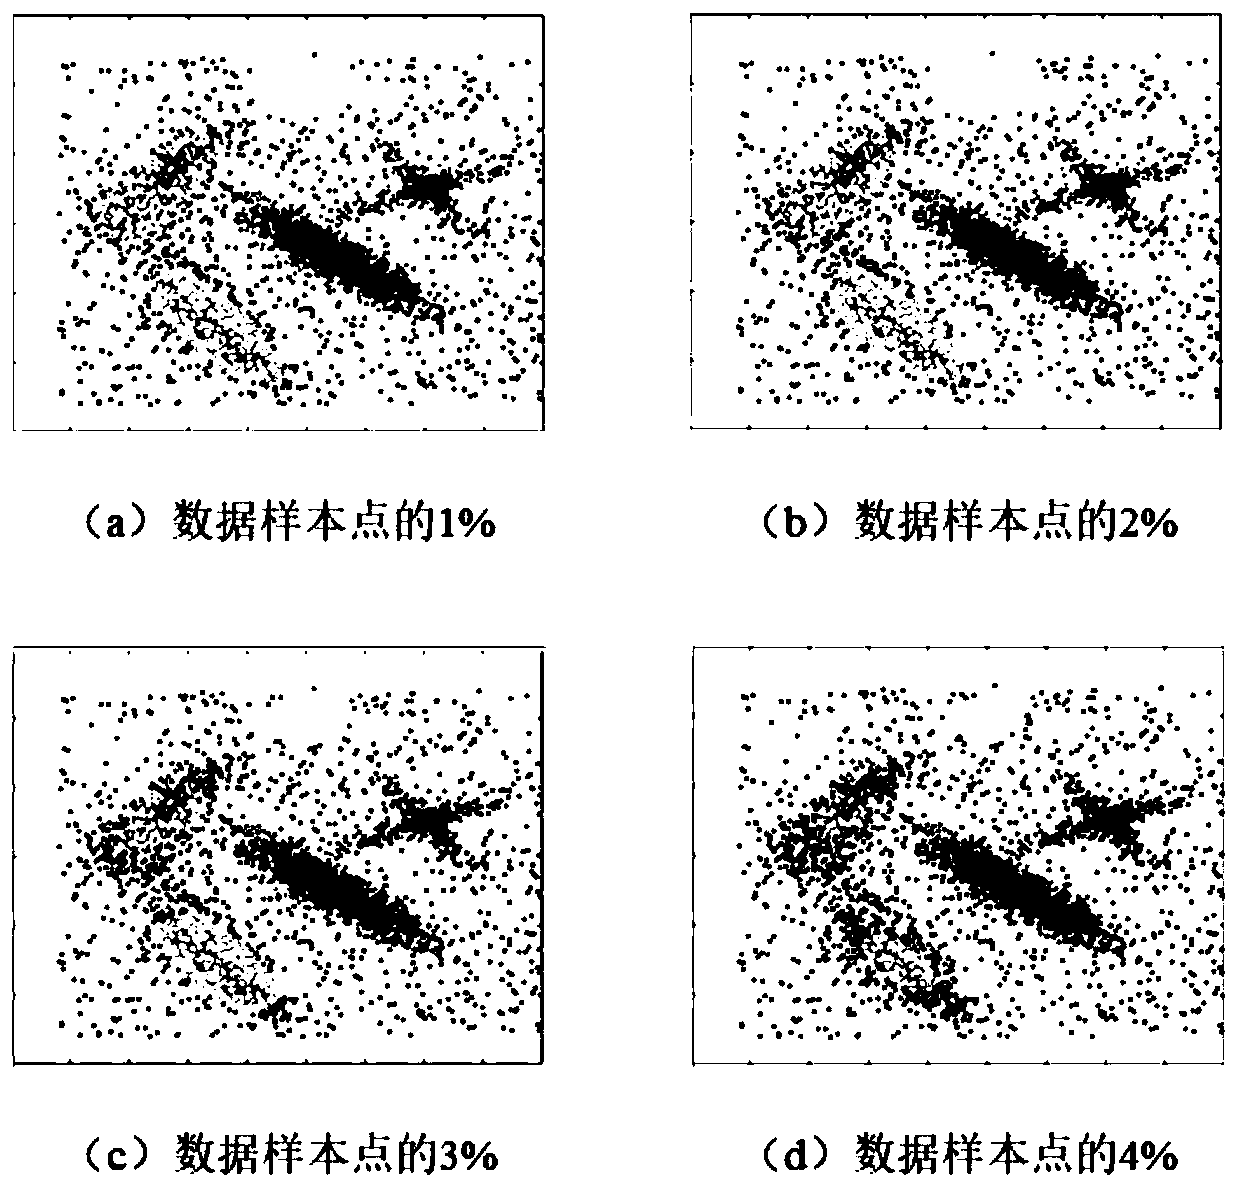 Steel quality detection method based on interval shadow set and density peak clustering